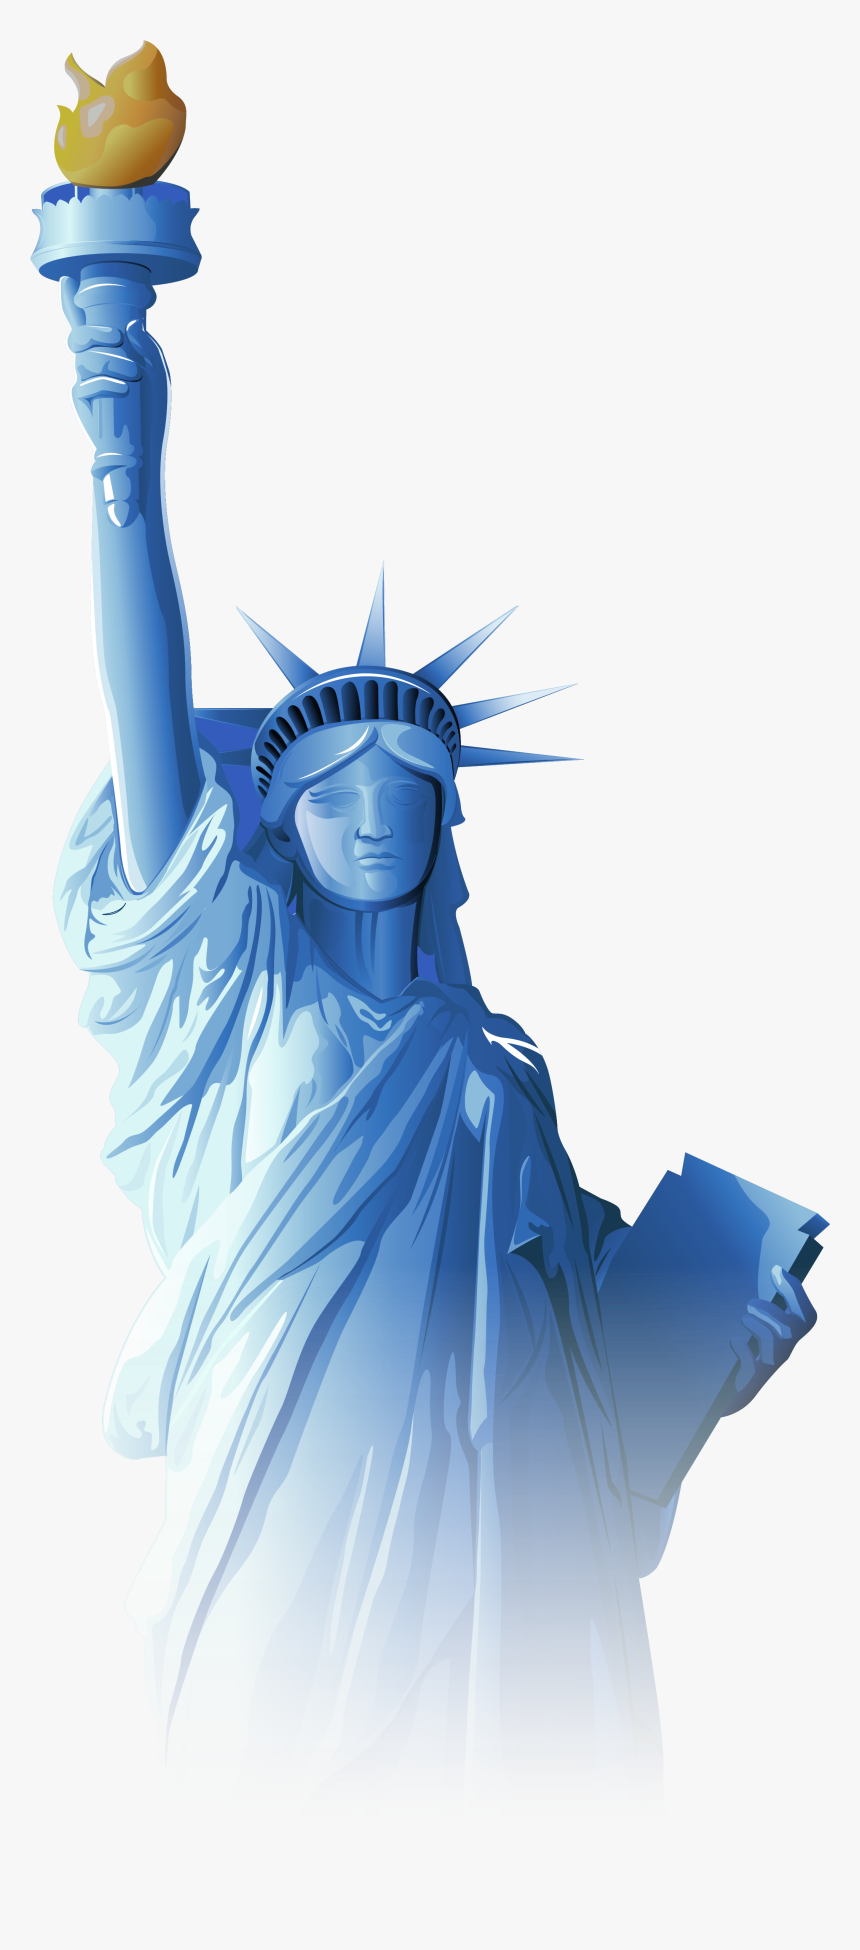 Statue Of Liberty Png - Statue Of Liberty .png, Transparent Png, Free Download